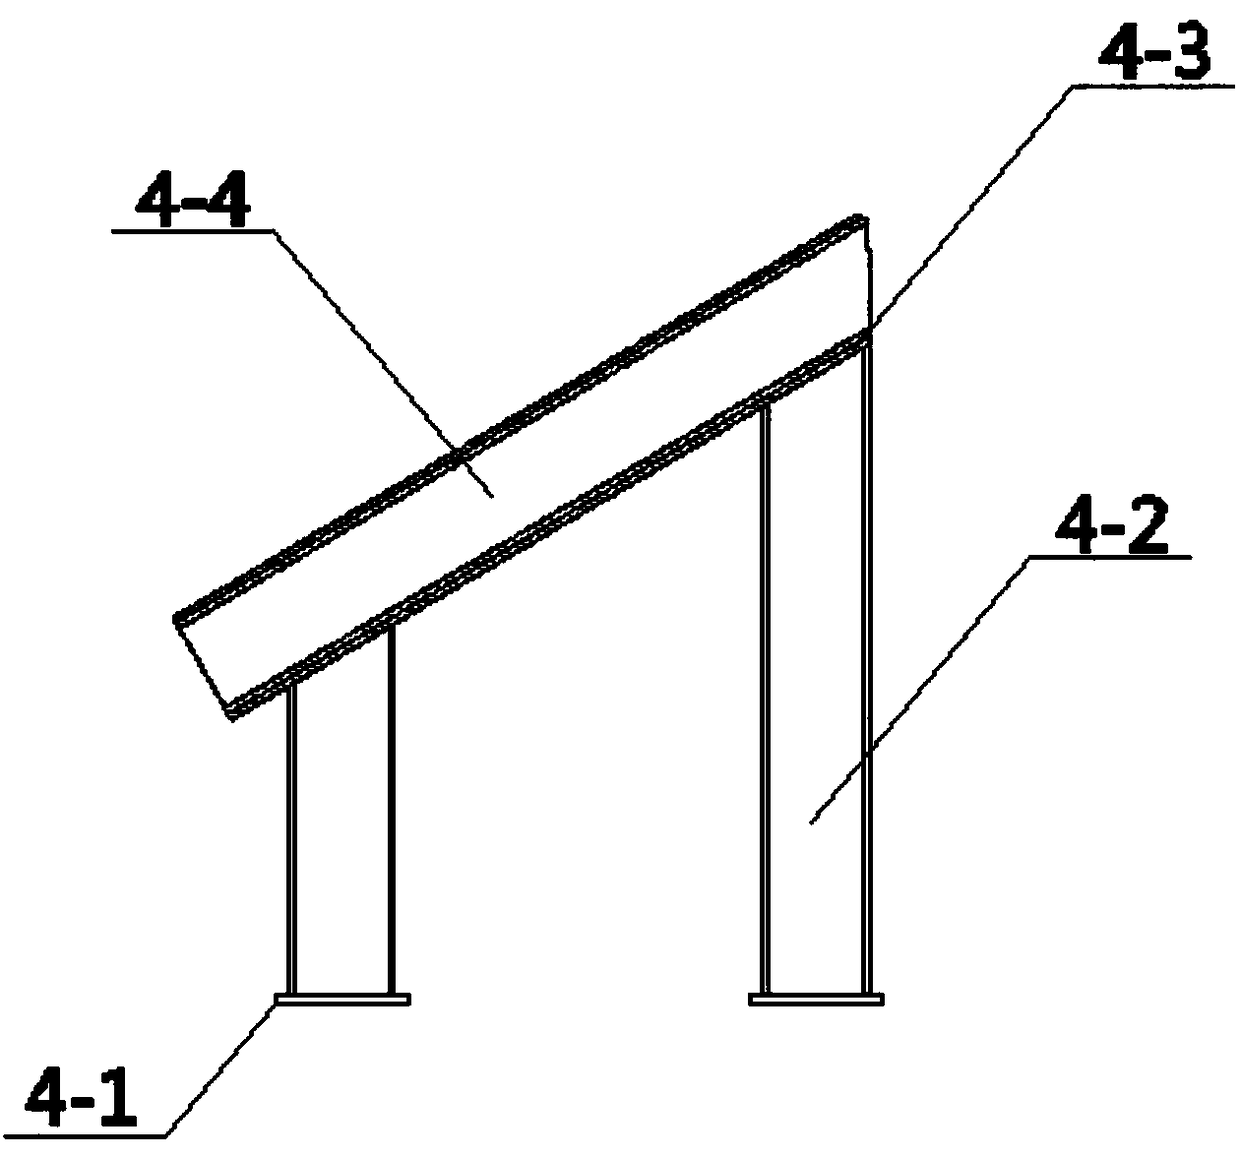 A hoisting method for a large long-distance slab conveyor chain